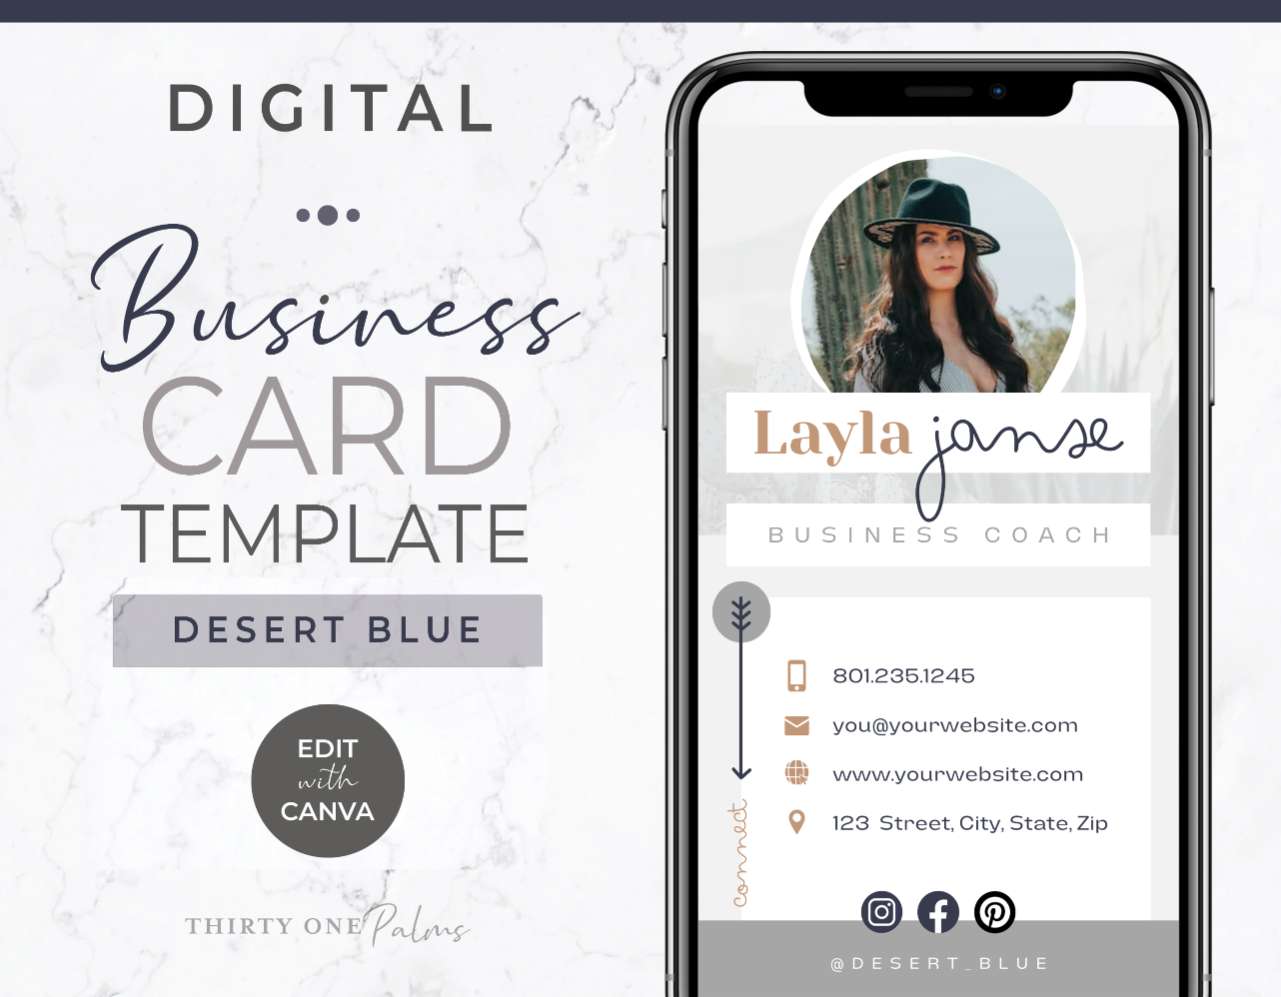 Digital Business Card Template for Canva – Desert Blue